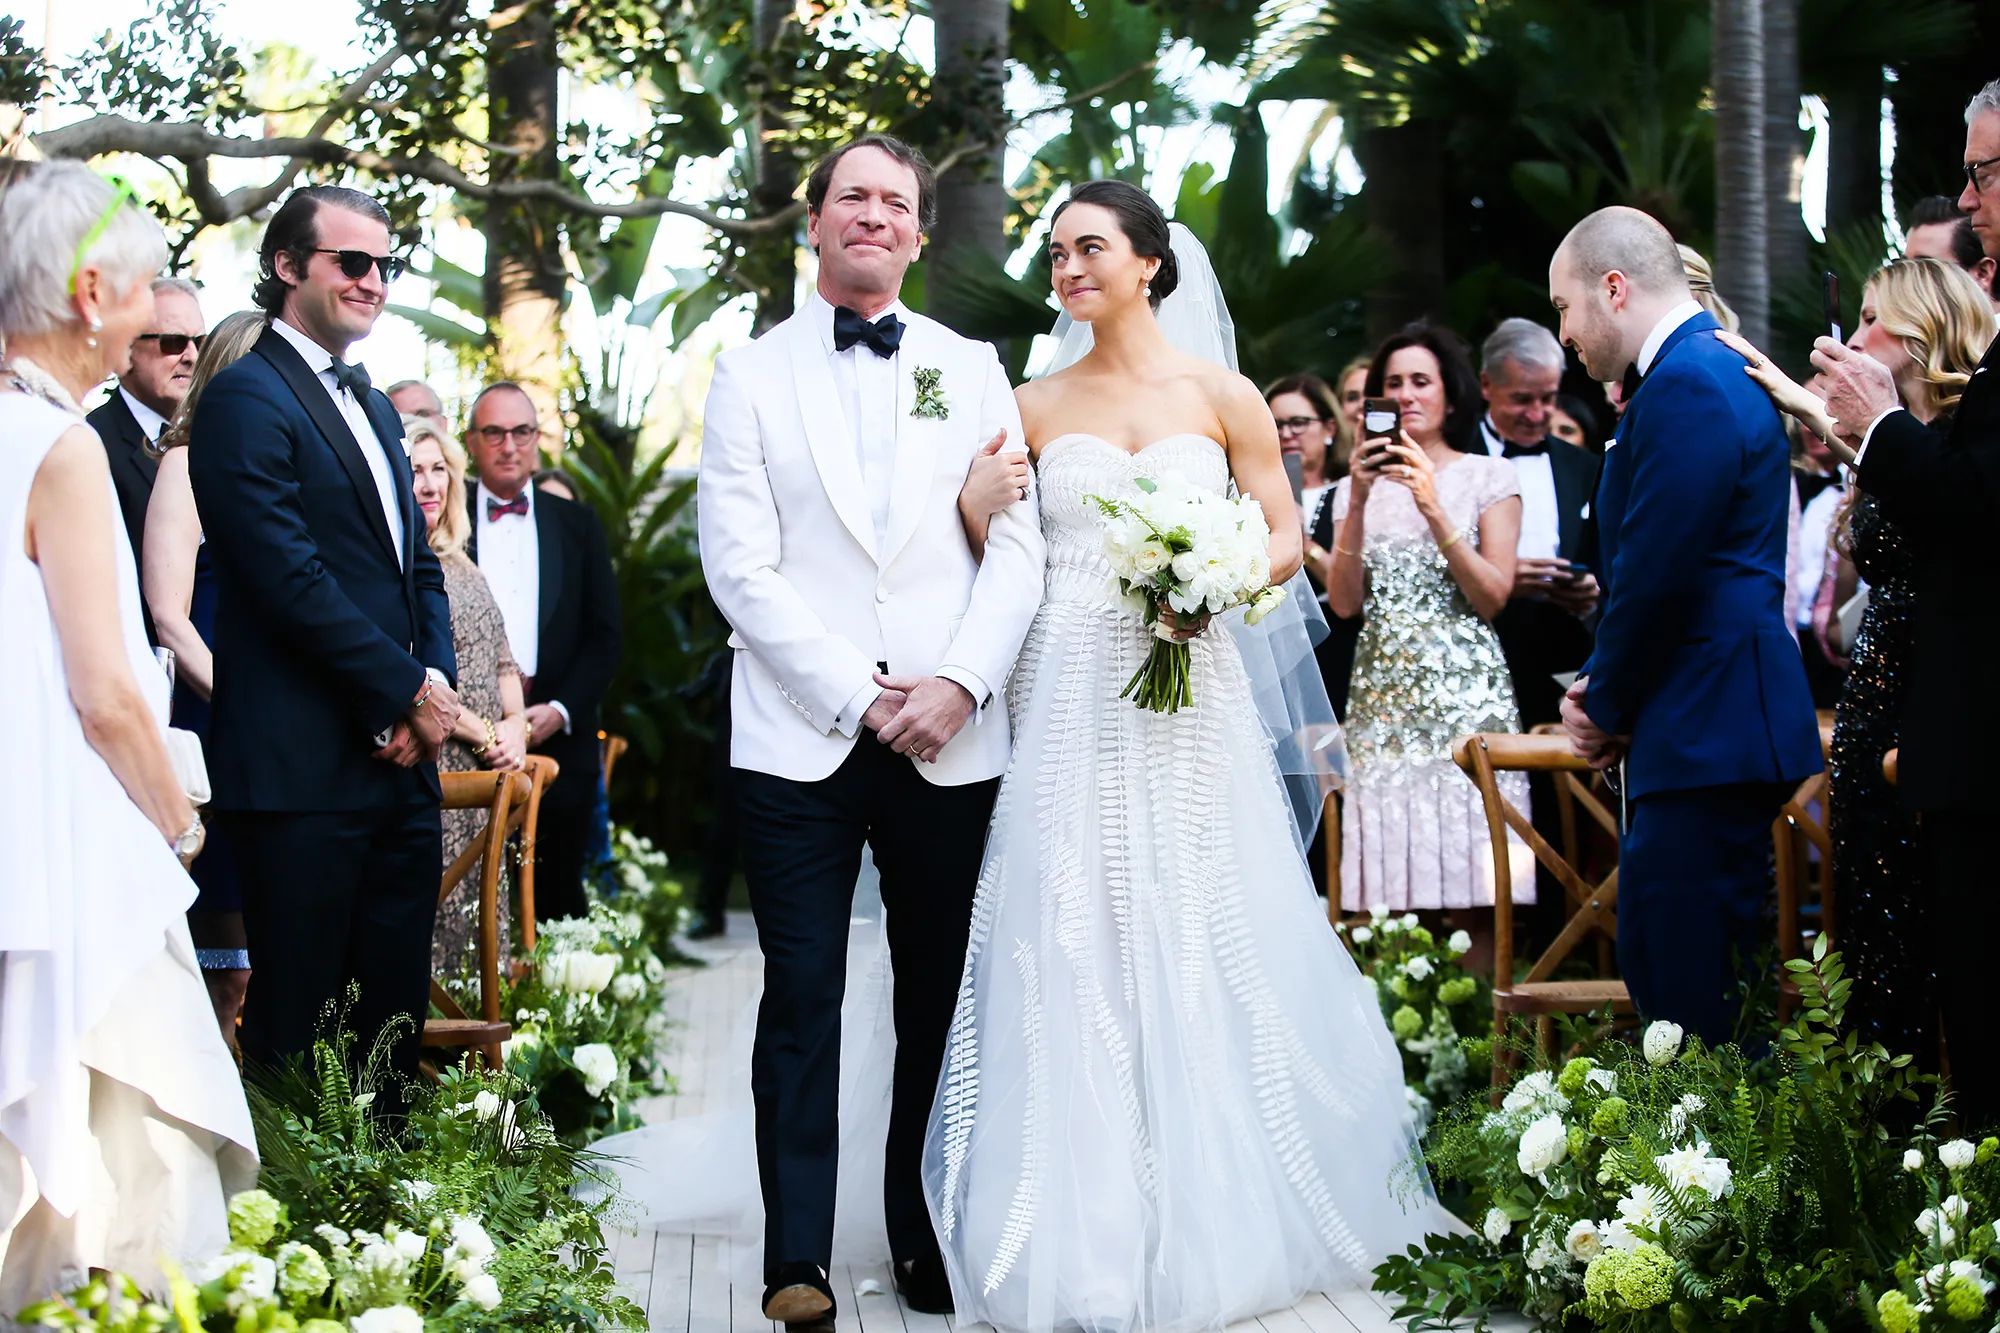 Meggie Kempner’s Gorgeous Garden Wedding in Beverly Hills